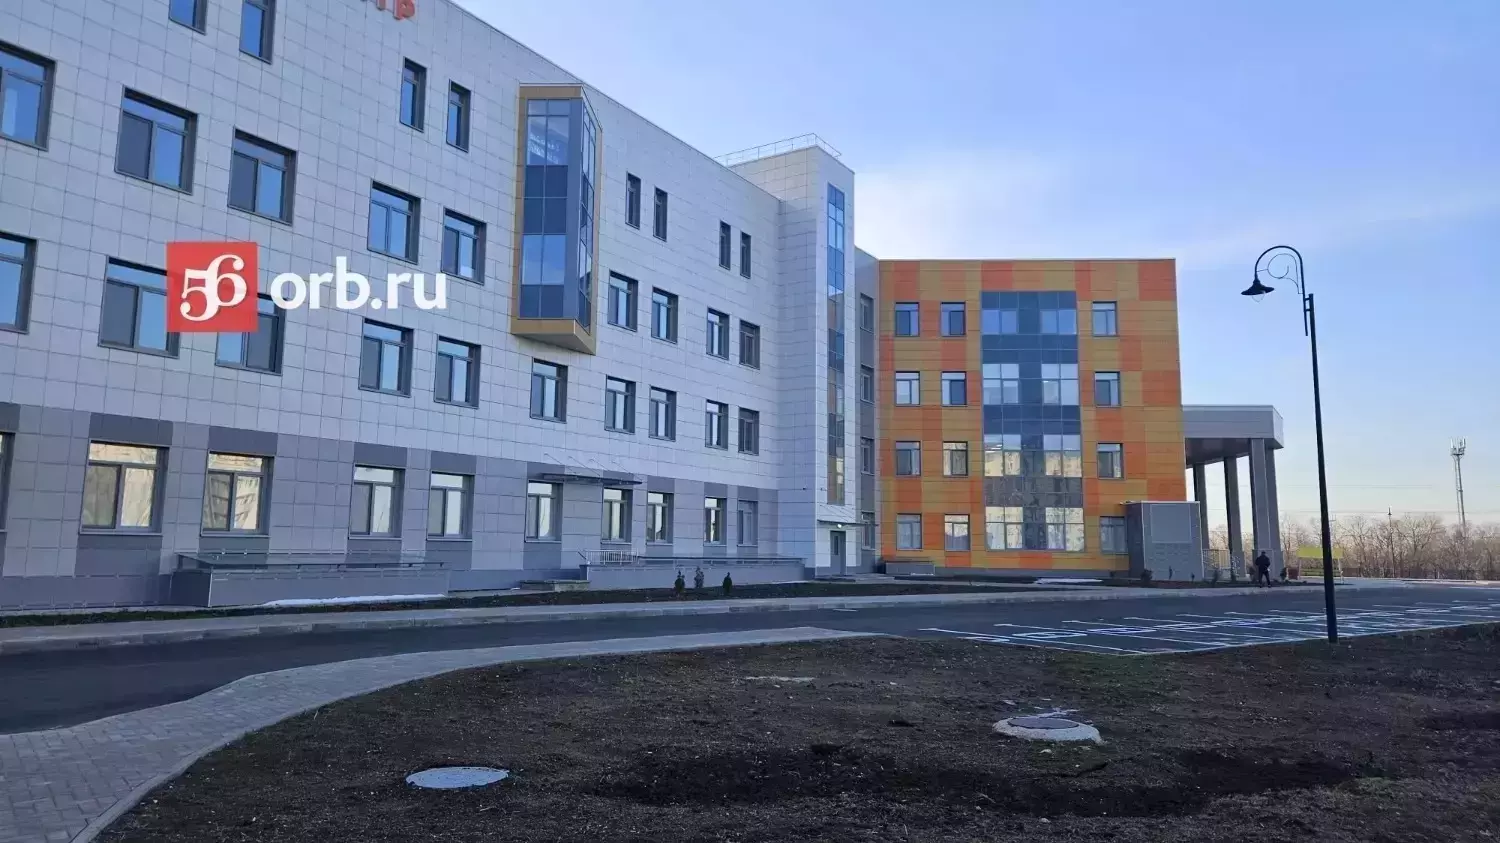 Новая больница на улице Гаранькина